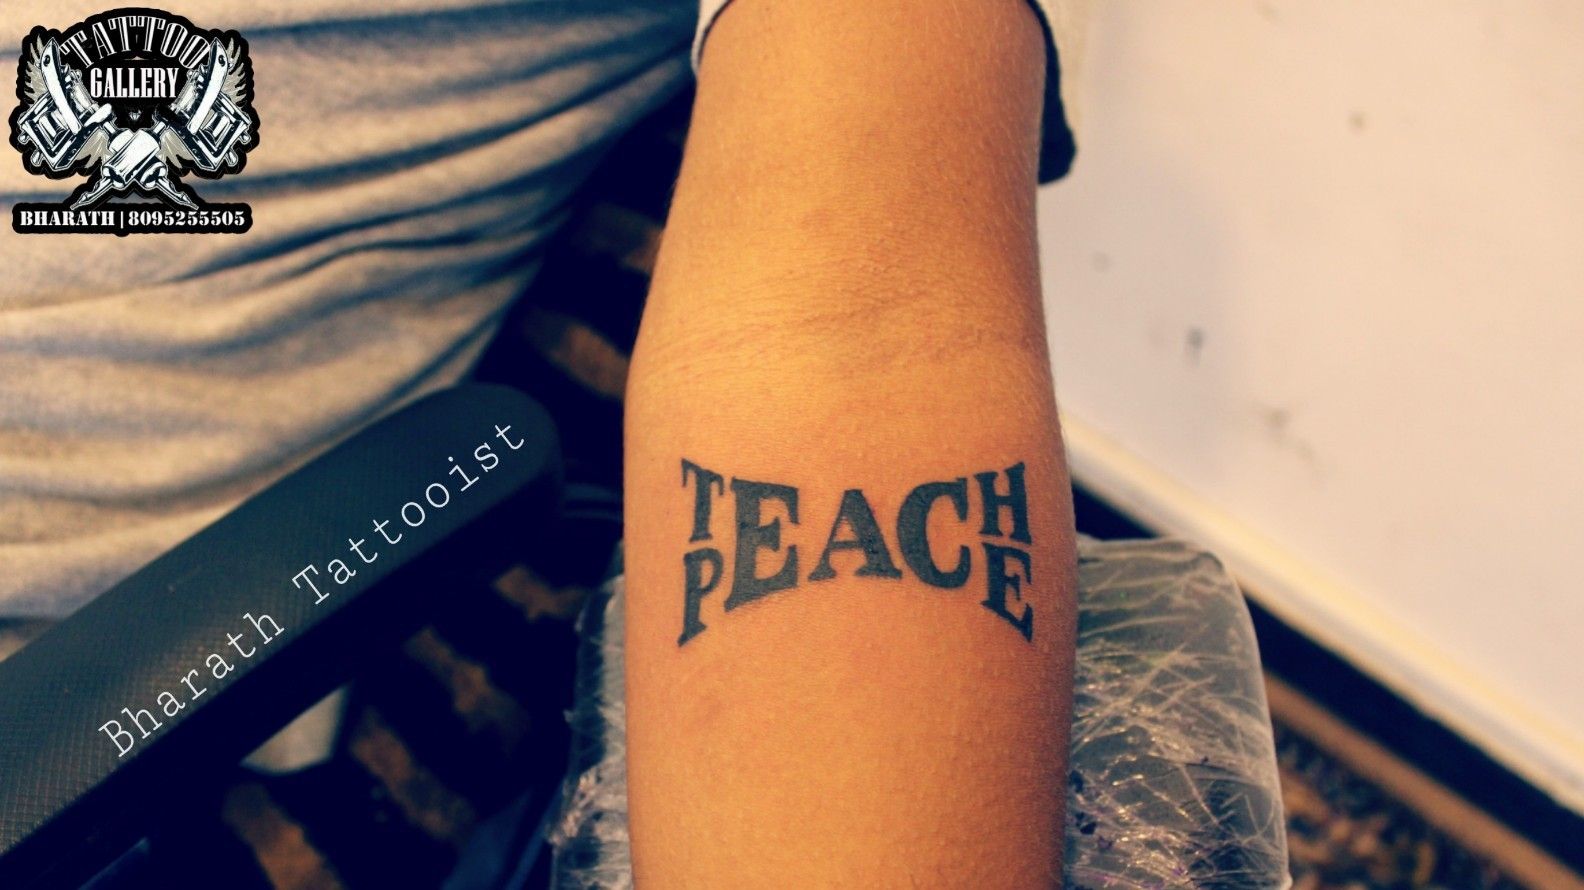 Teach Peace Prints  Tattoo Ticket Please read terms  conditions  TEACH  PEACE PRINTS